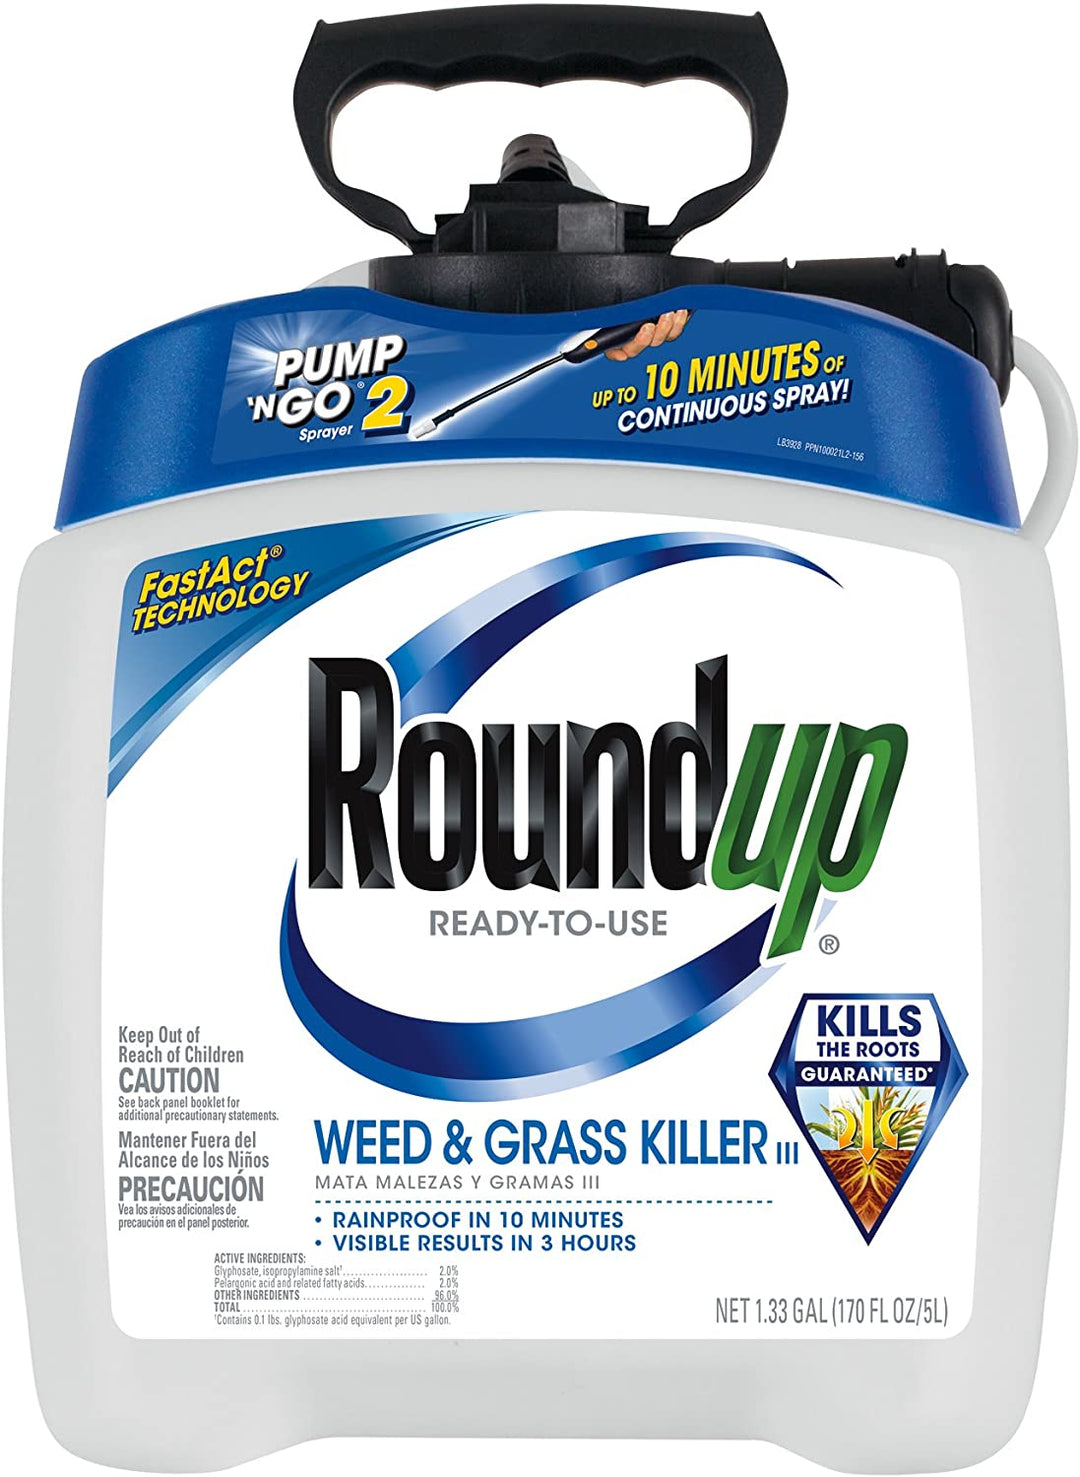 RoundUp Weed & Grass Killer III RTU